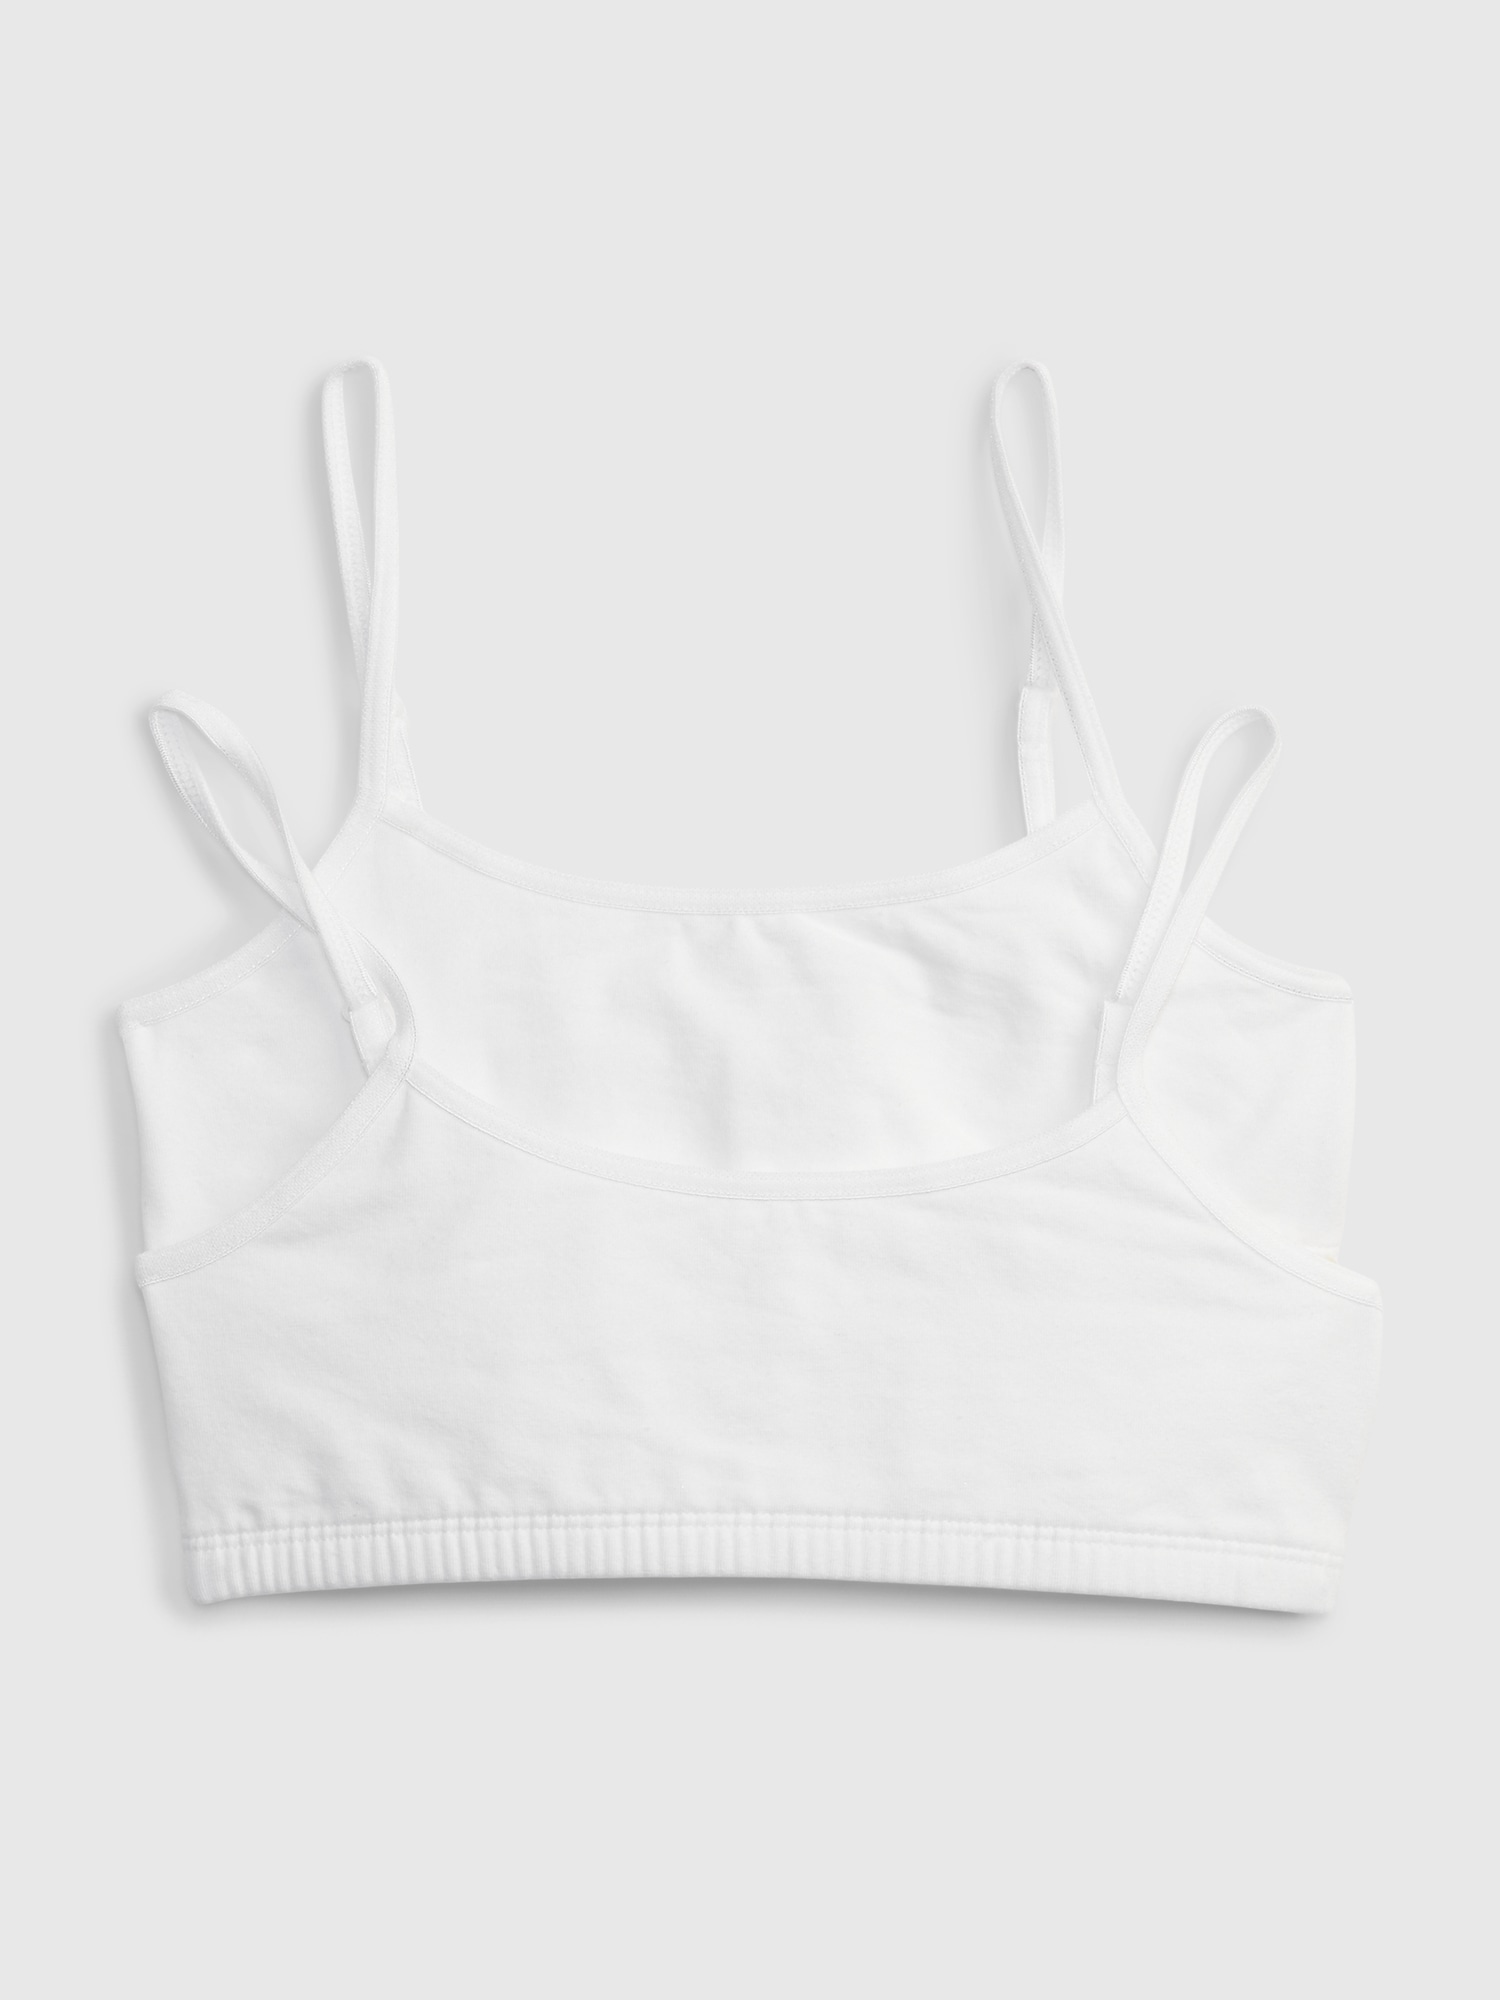 Teenage Bras for Girls Spandex / Organic Cotton Comfortable